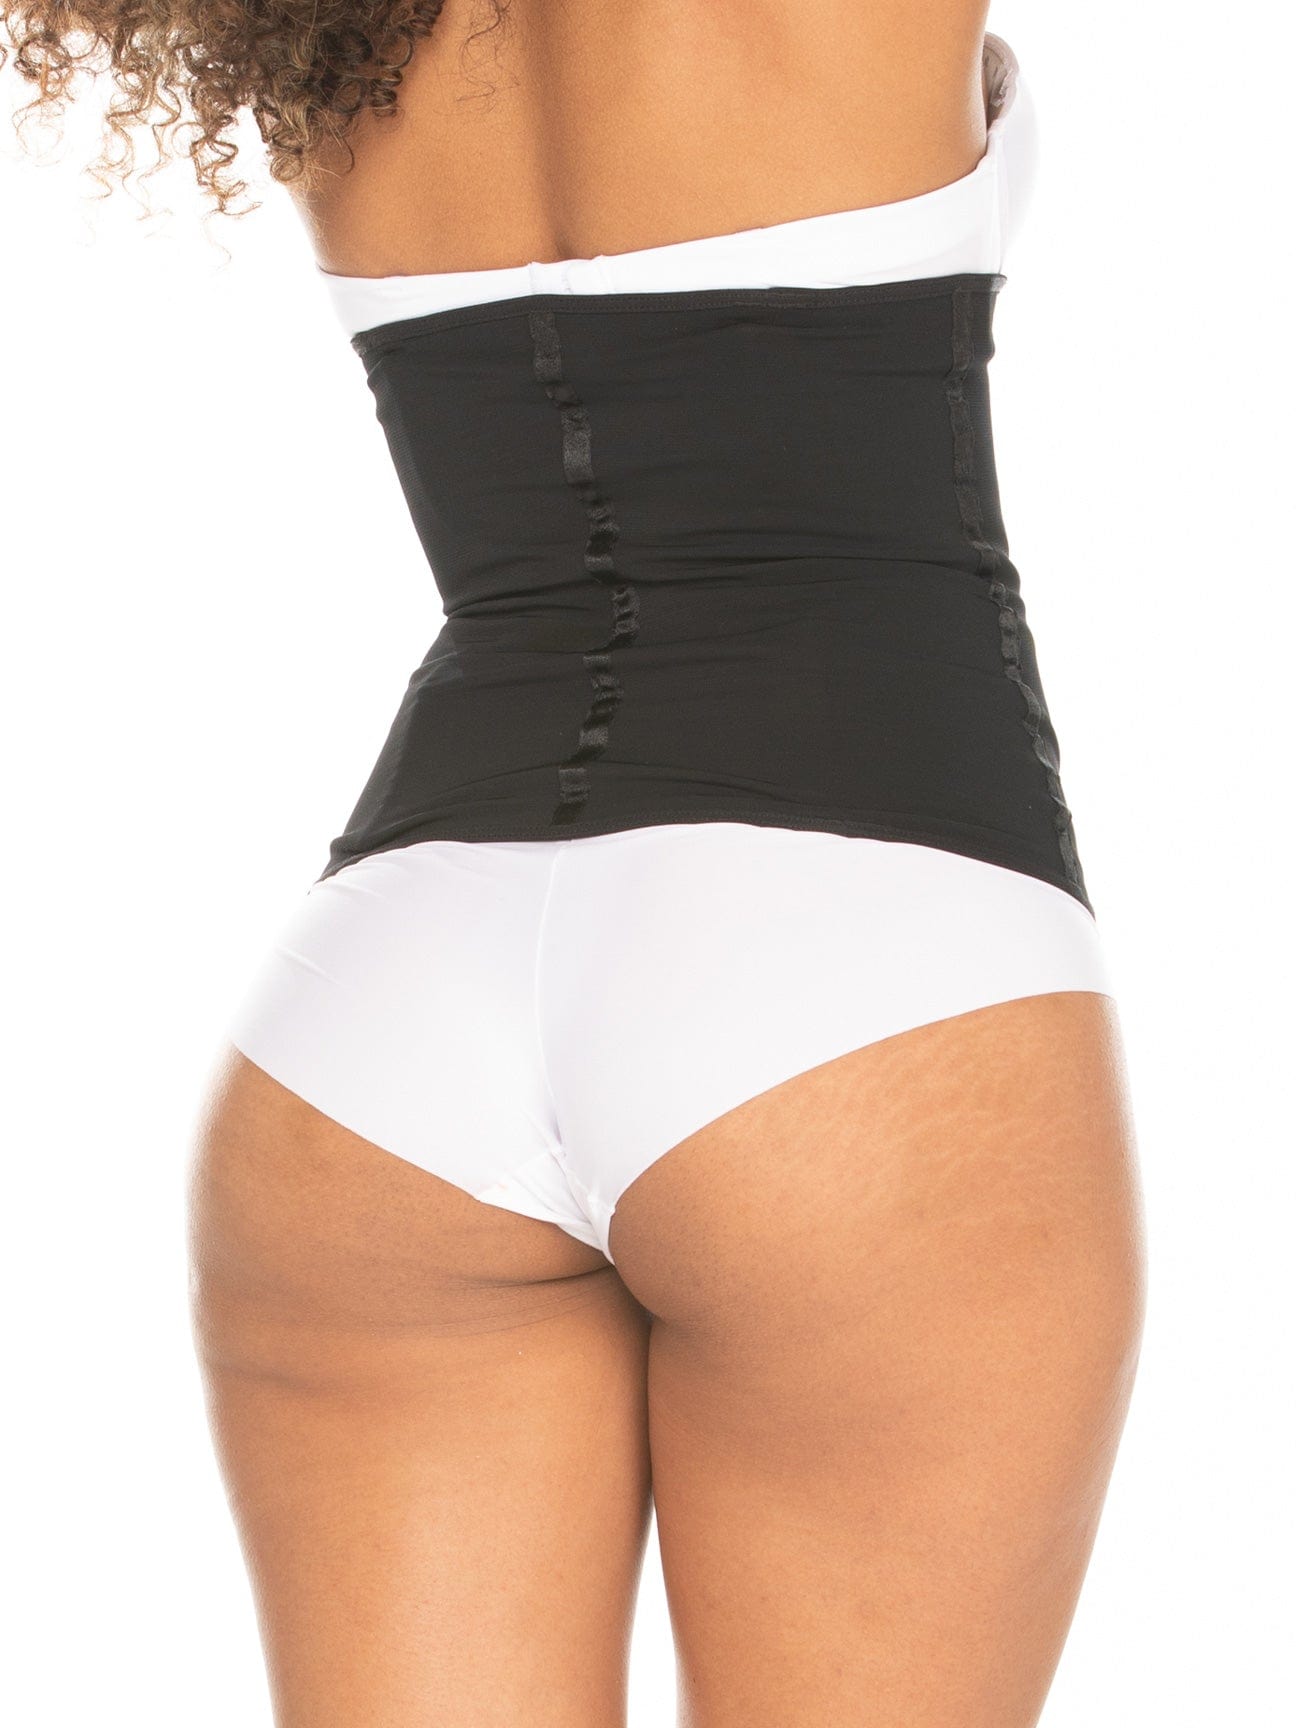 Back butt view of a model wearing a black strapless shapewear.